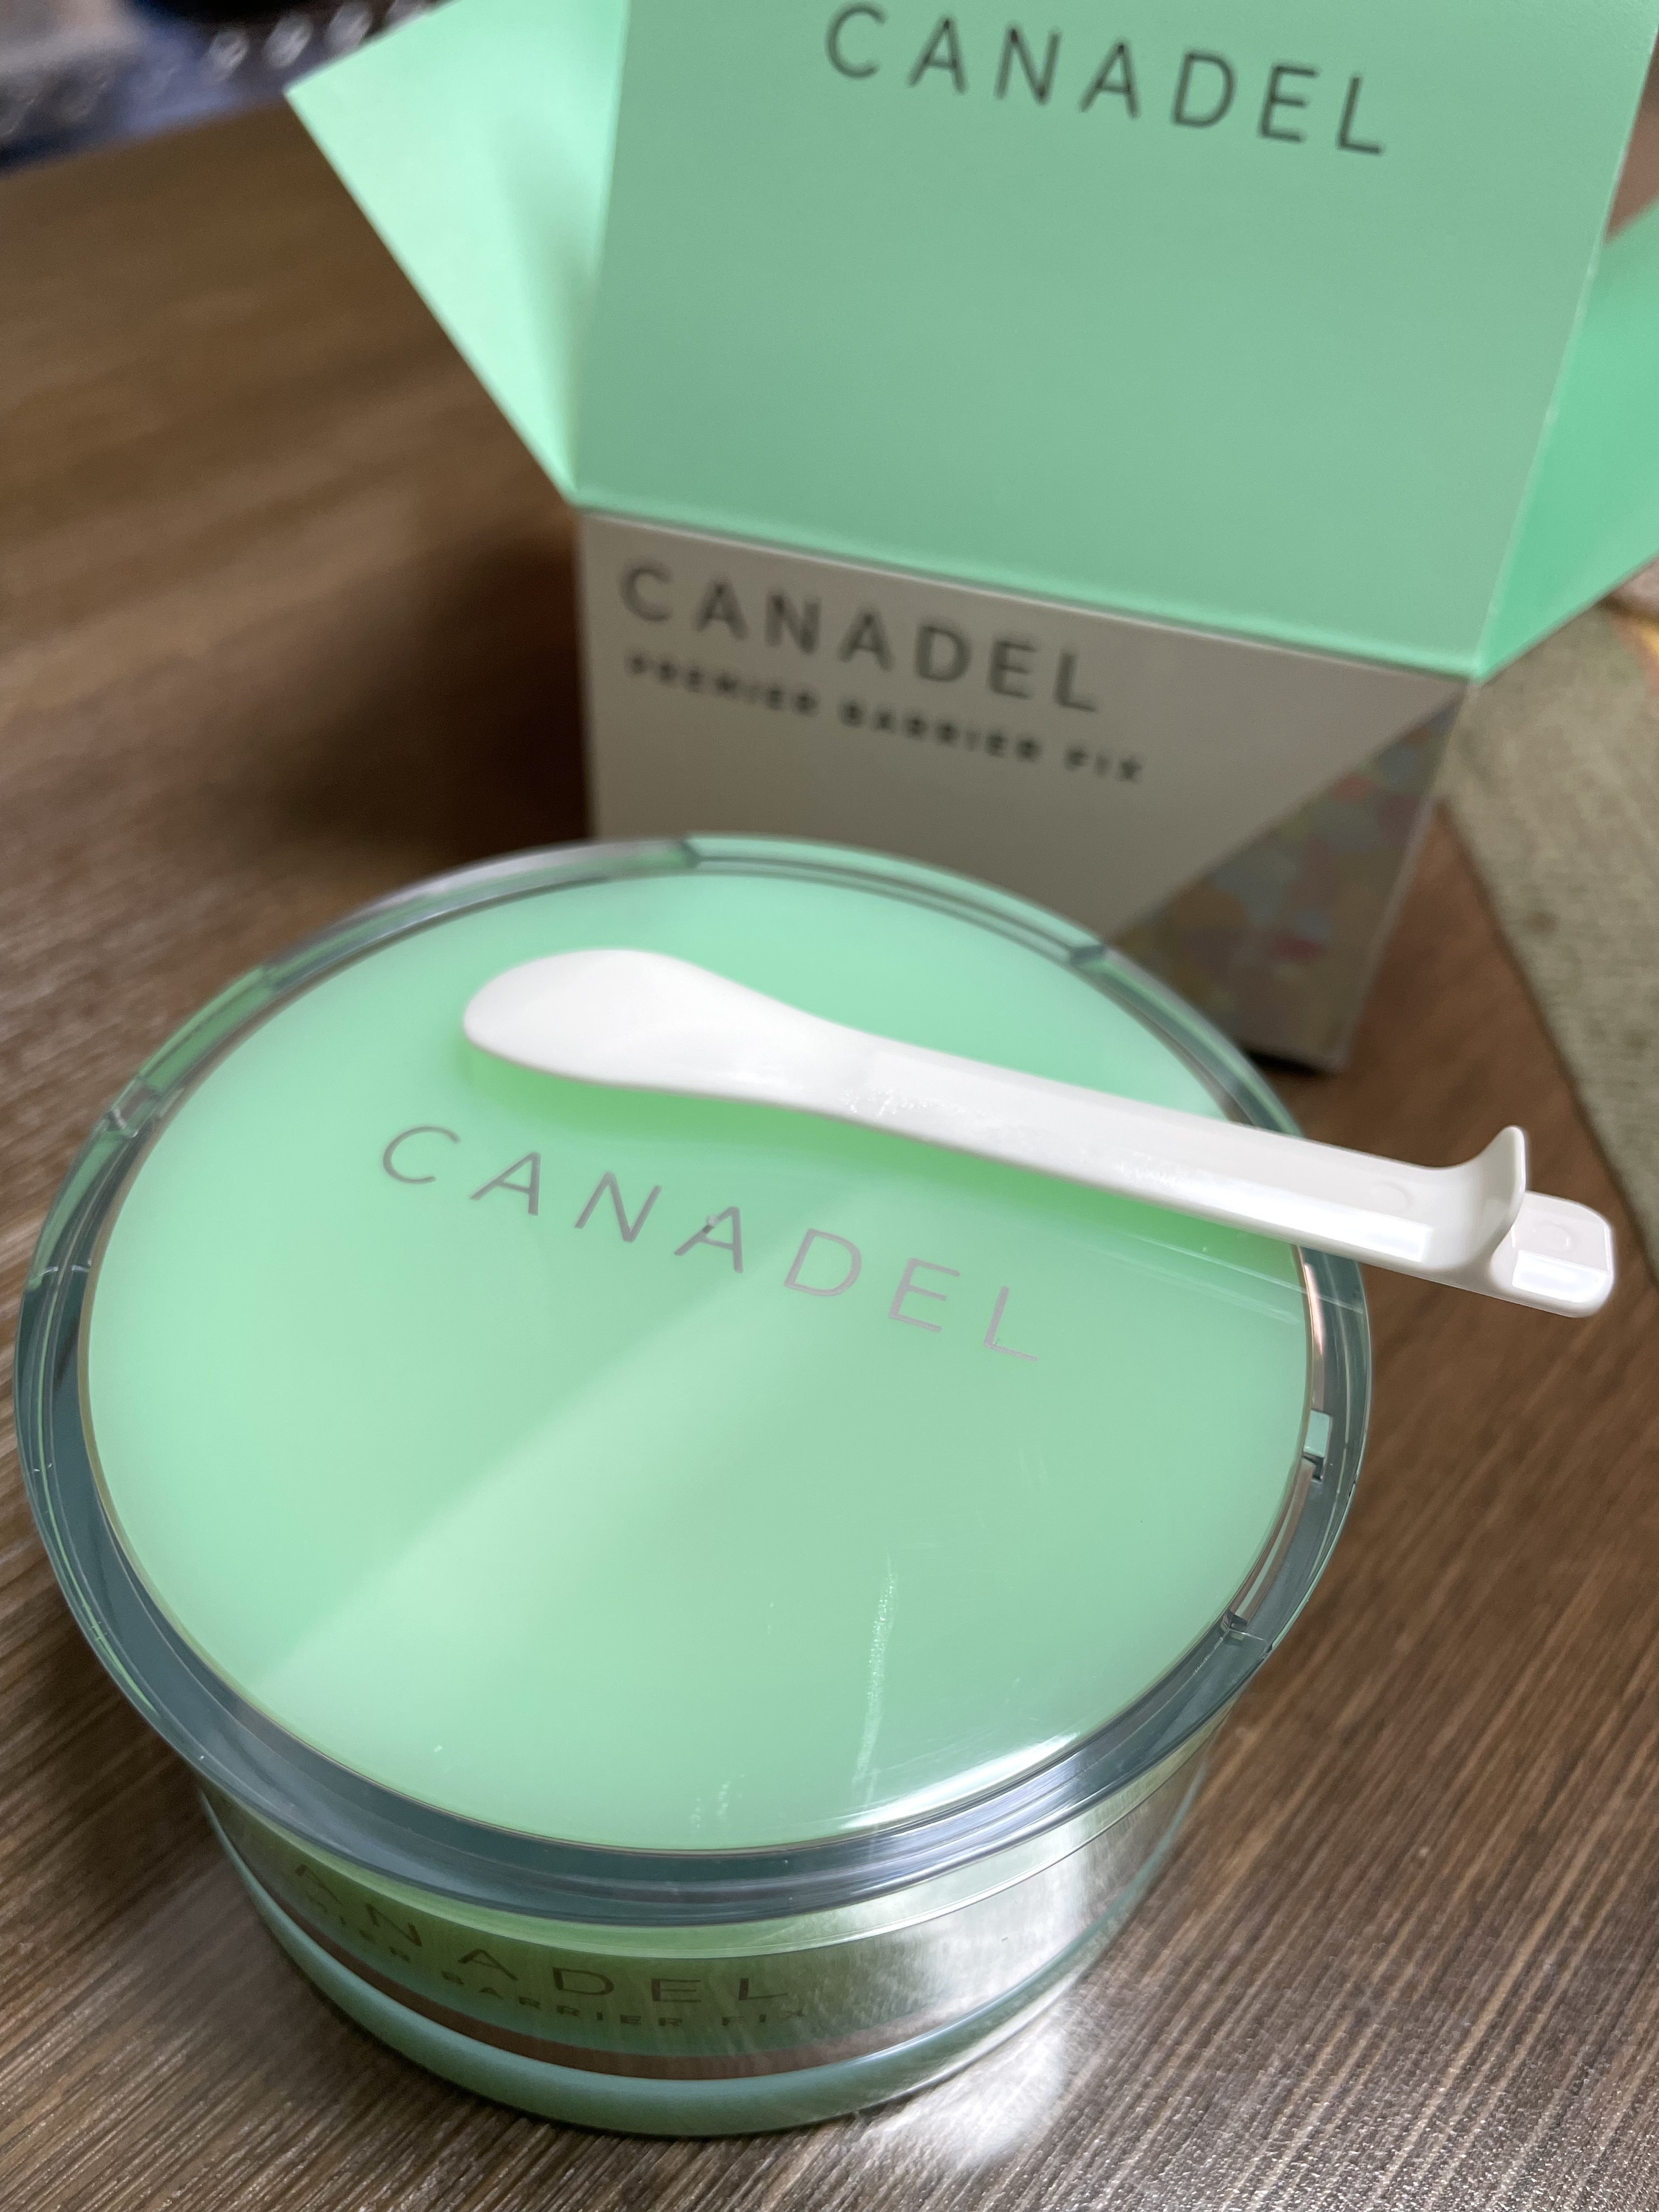 CANADEL(カナデル) / カナデル プレミアバリアフィックスの公式商品 